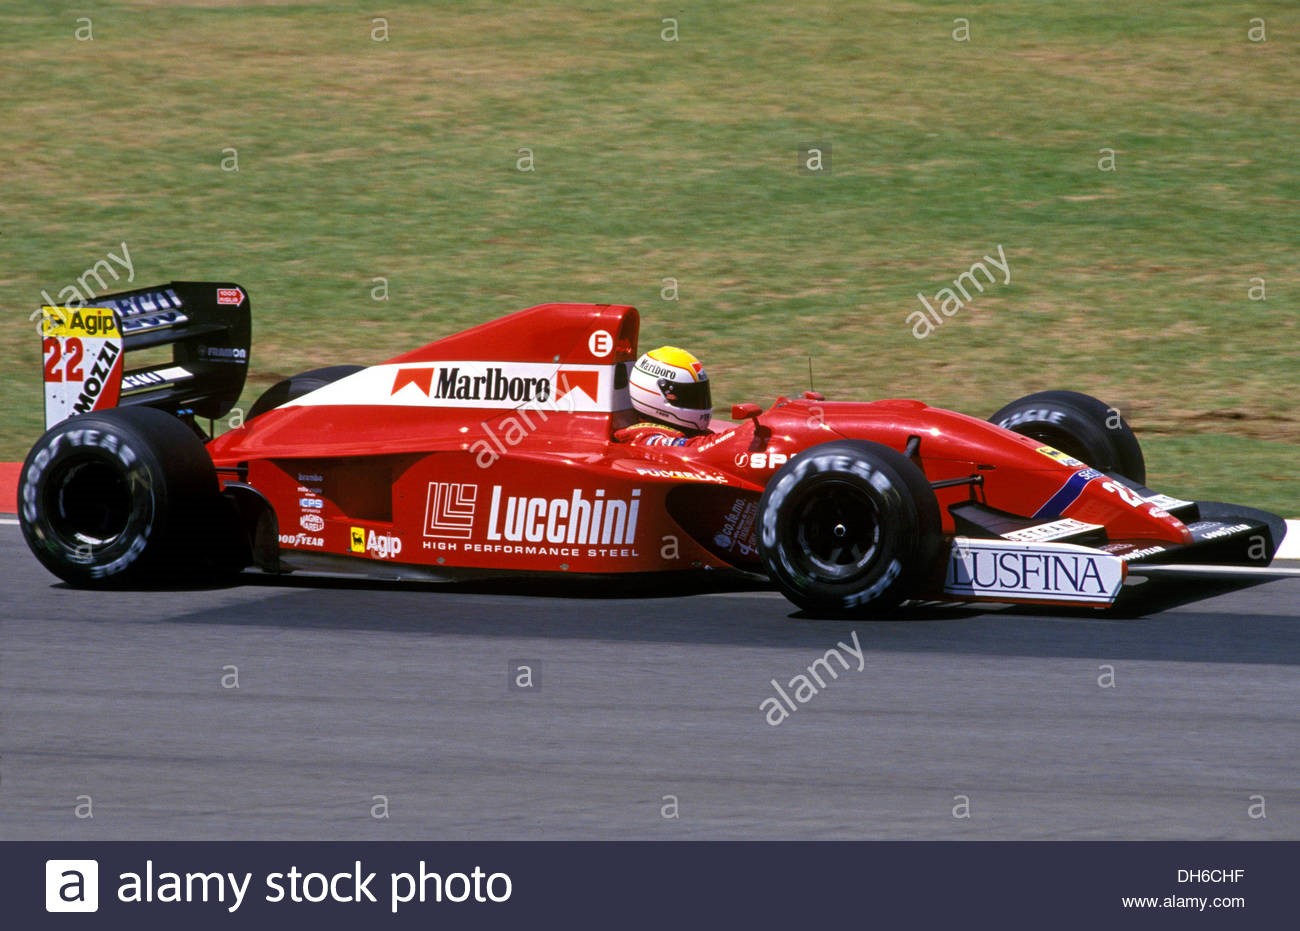 Pierluigi Martini in a Dallara Ferrari at the San Marino GP. Imola, 17 May 1992.